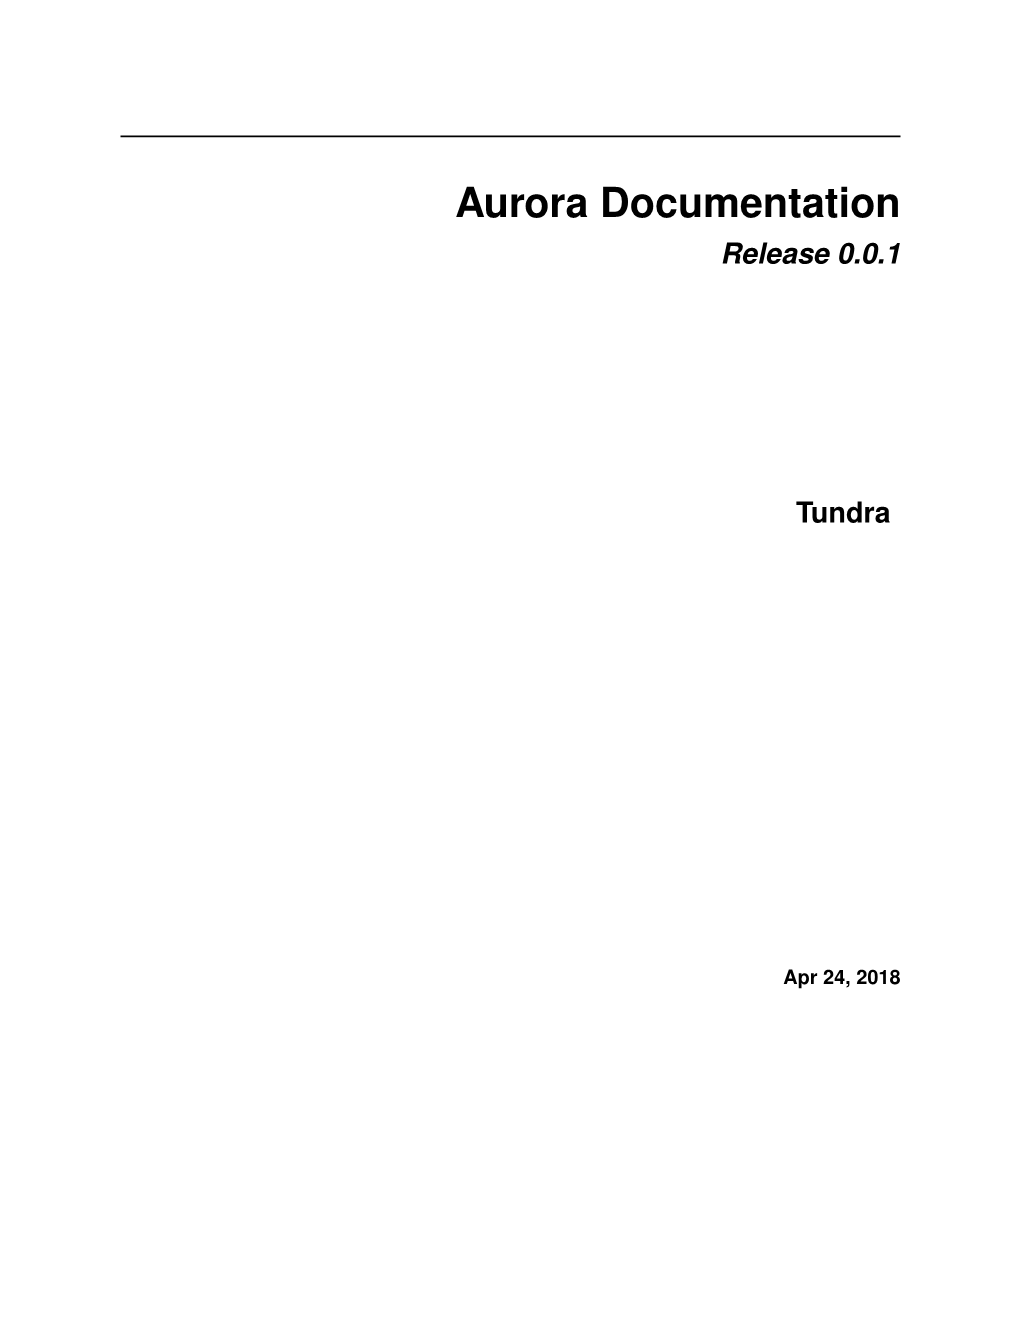 Aurora Documentation Release 0.0.1